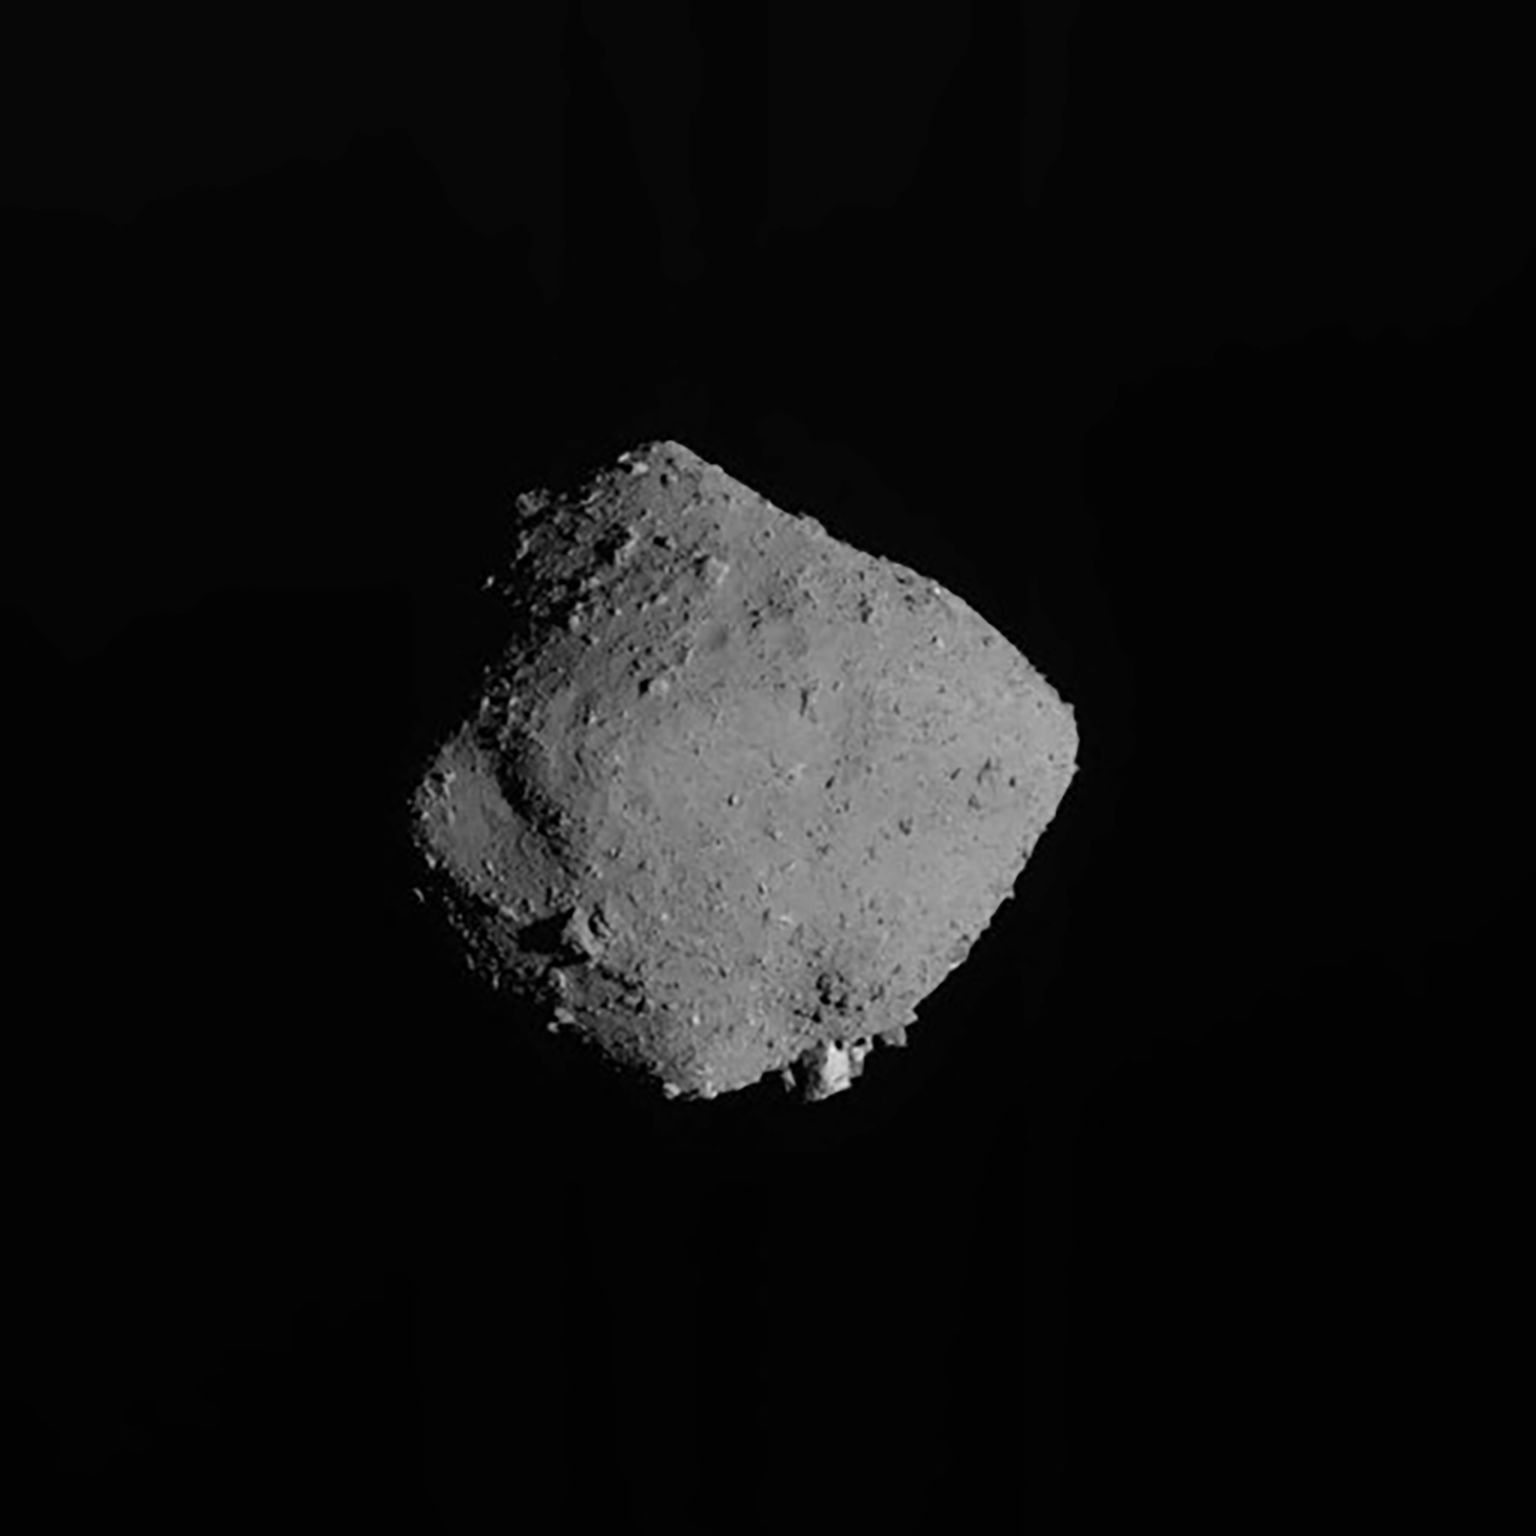 Asteroīds "Ryugu"